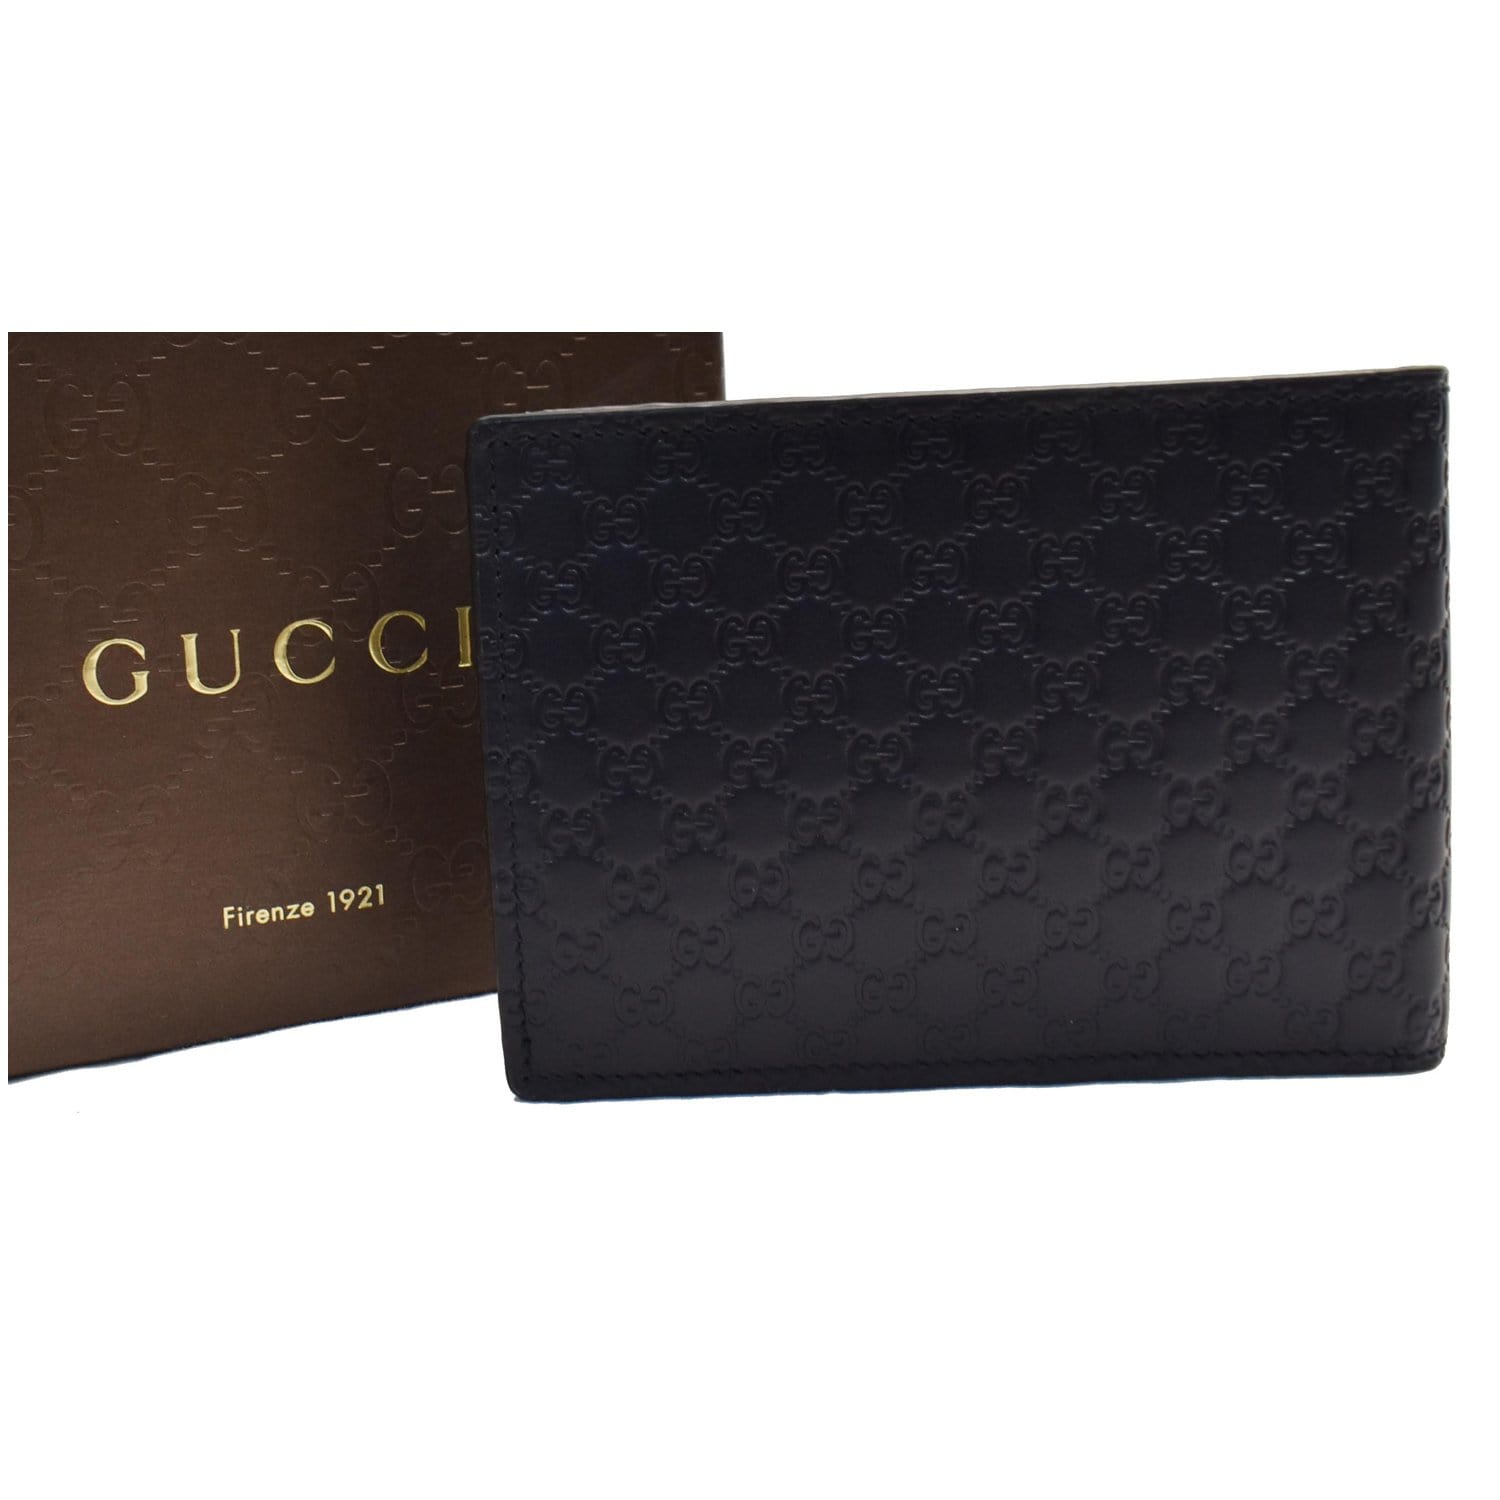 Gucci Men's Wallet  Gucci mens wallet, Wallet men, Wallet